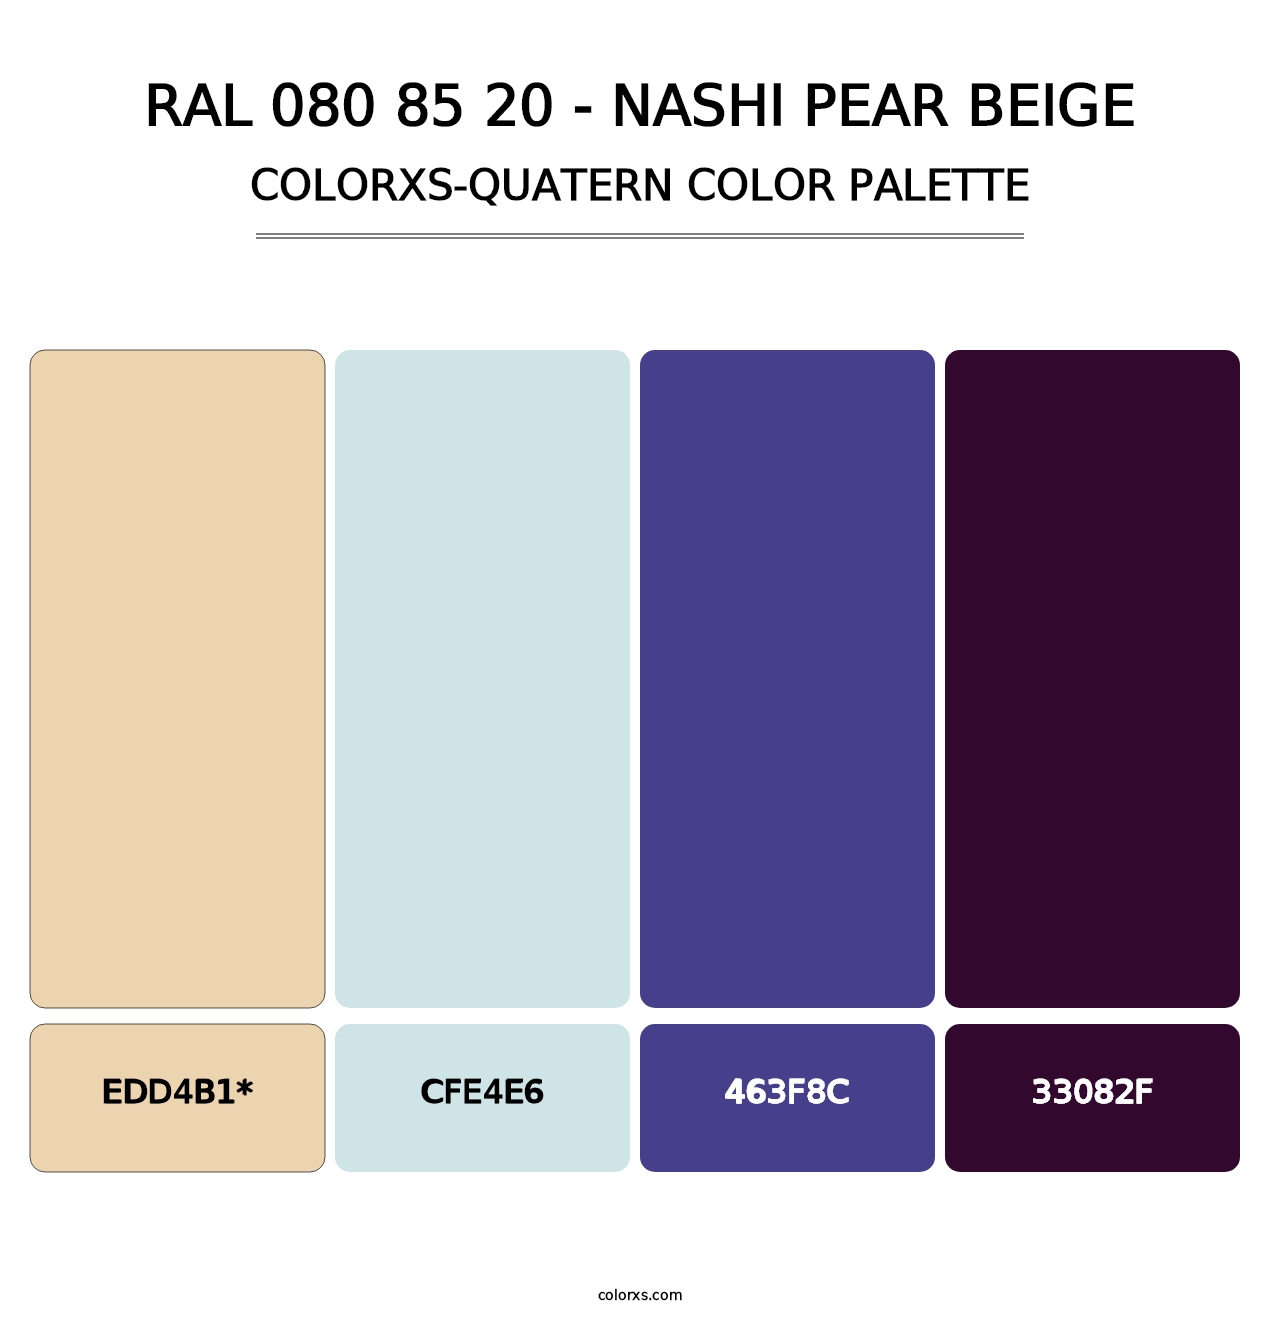 RAL 080 85 20 - Nashi Pear Beige - Colorxs Quatern Palette